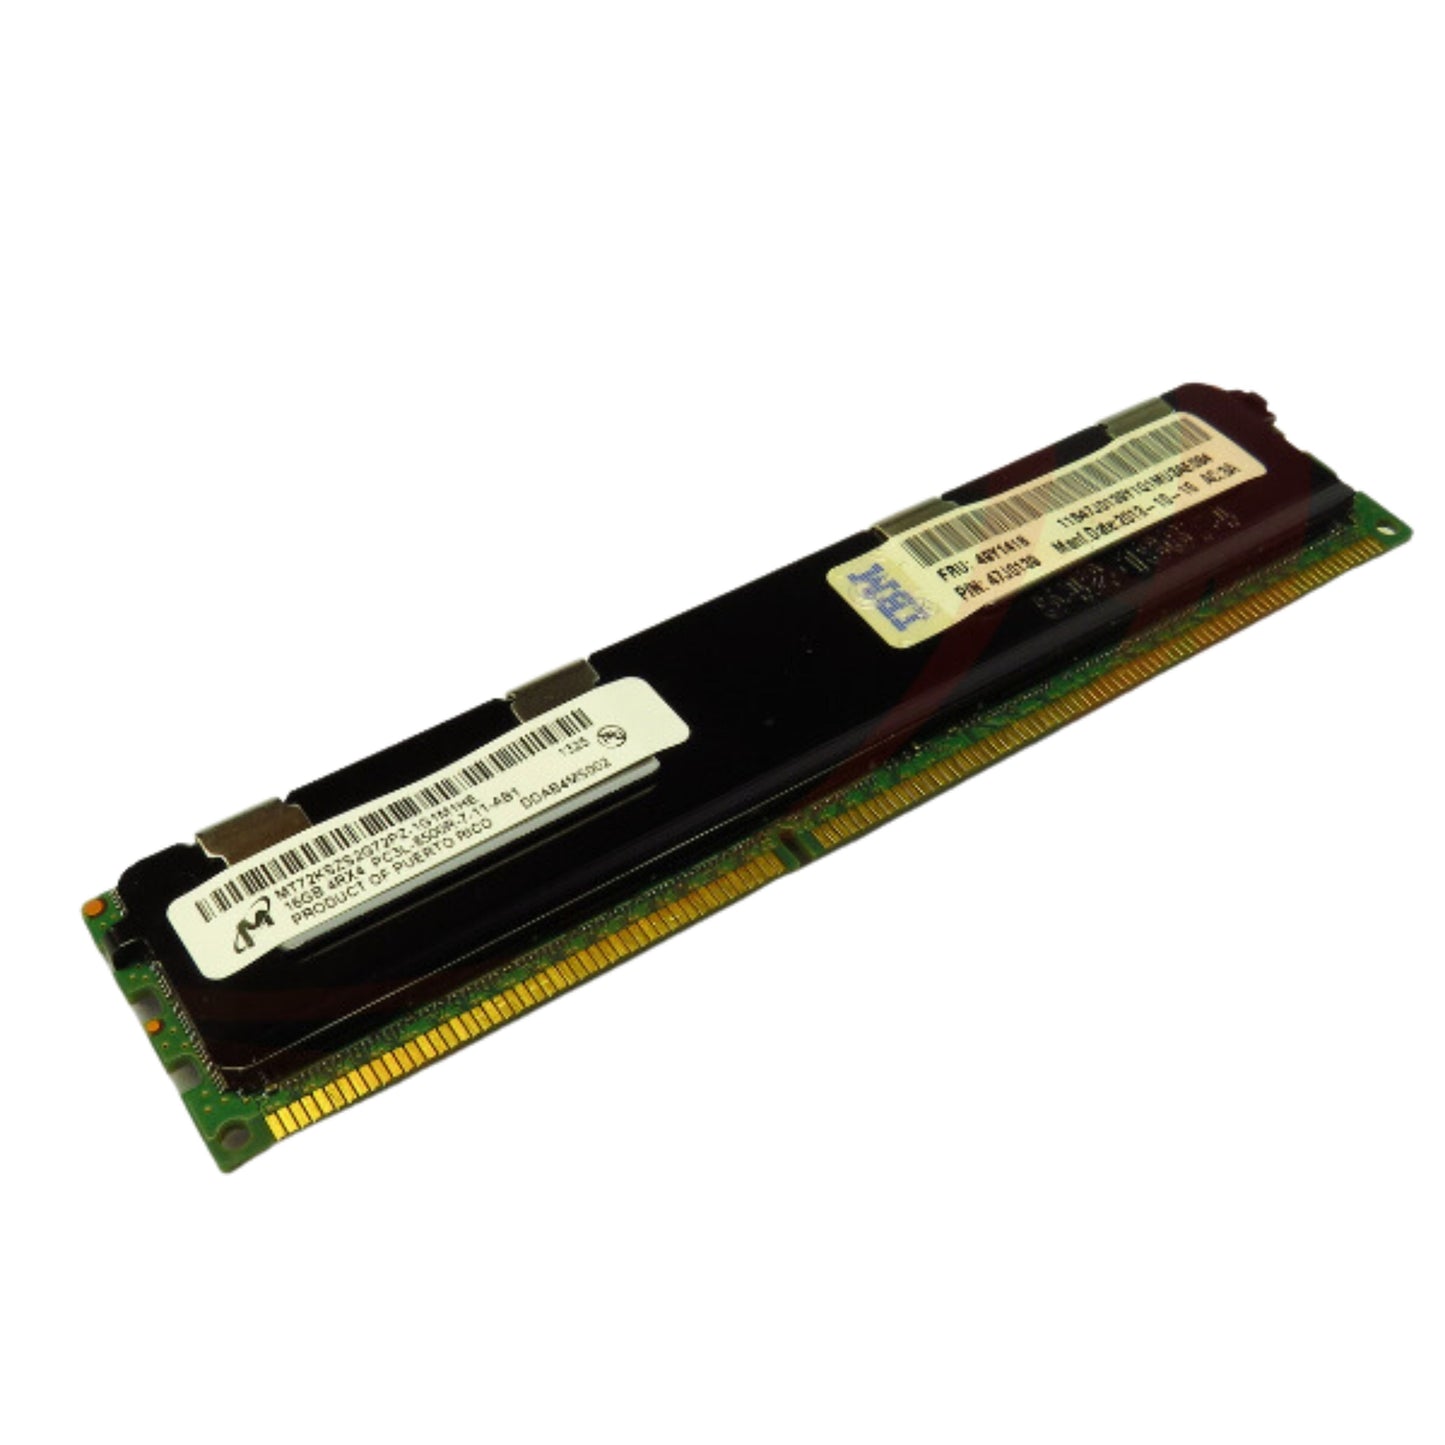 IBM 49Y1418 47J0139 16GB 4Rx4 PC3L-8500 1066MHz DDR3 CL7 ECC RDIMM Server Memory (Refurbished)